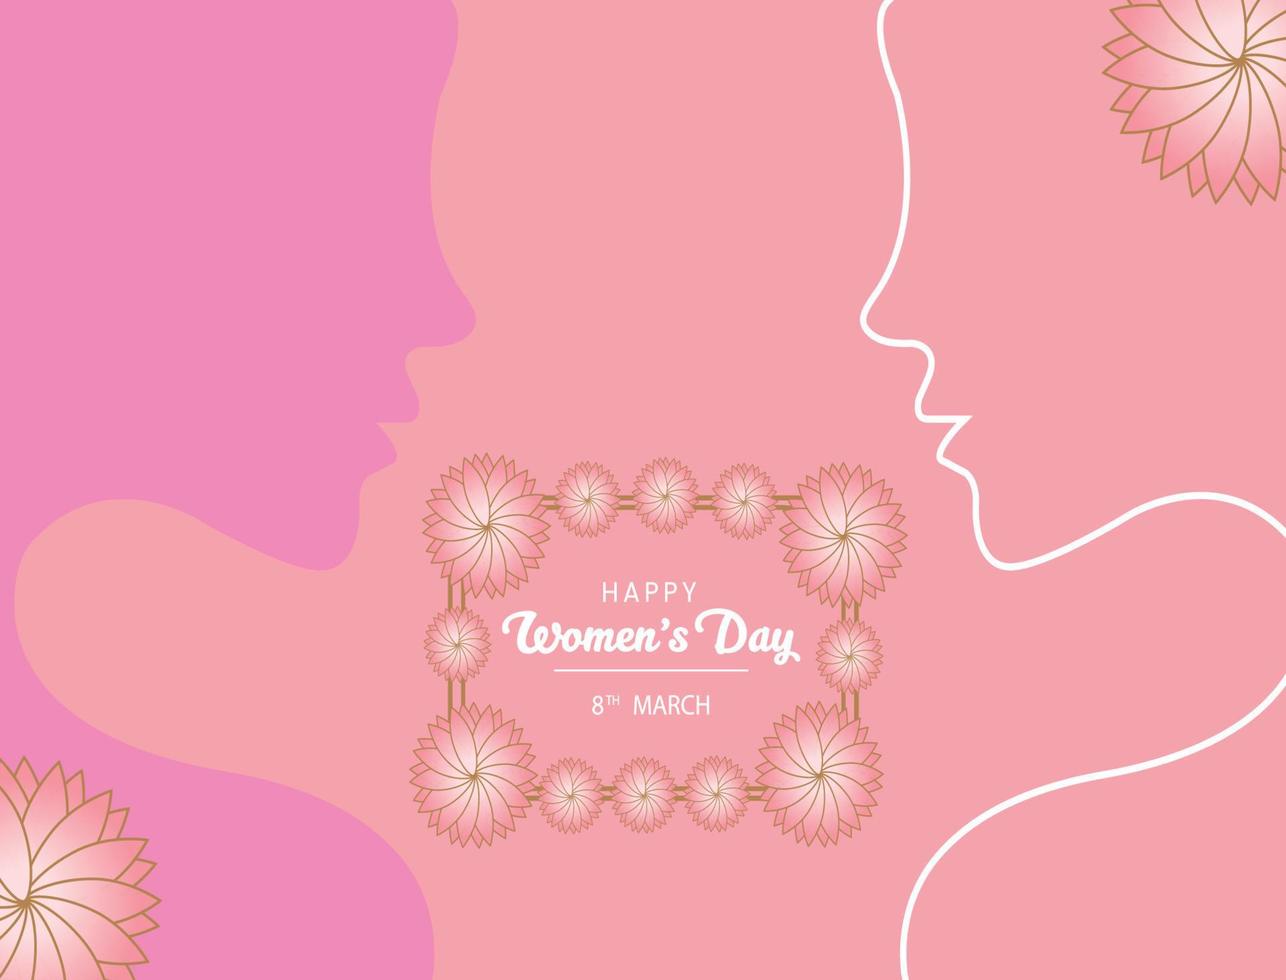 International Happy Women's Day Greeting Card Design vector